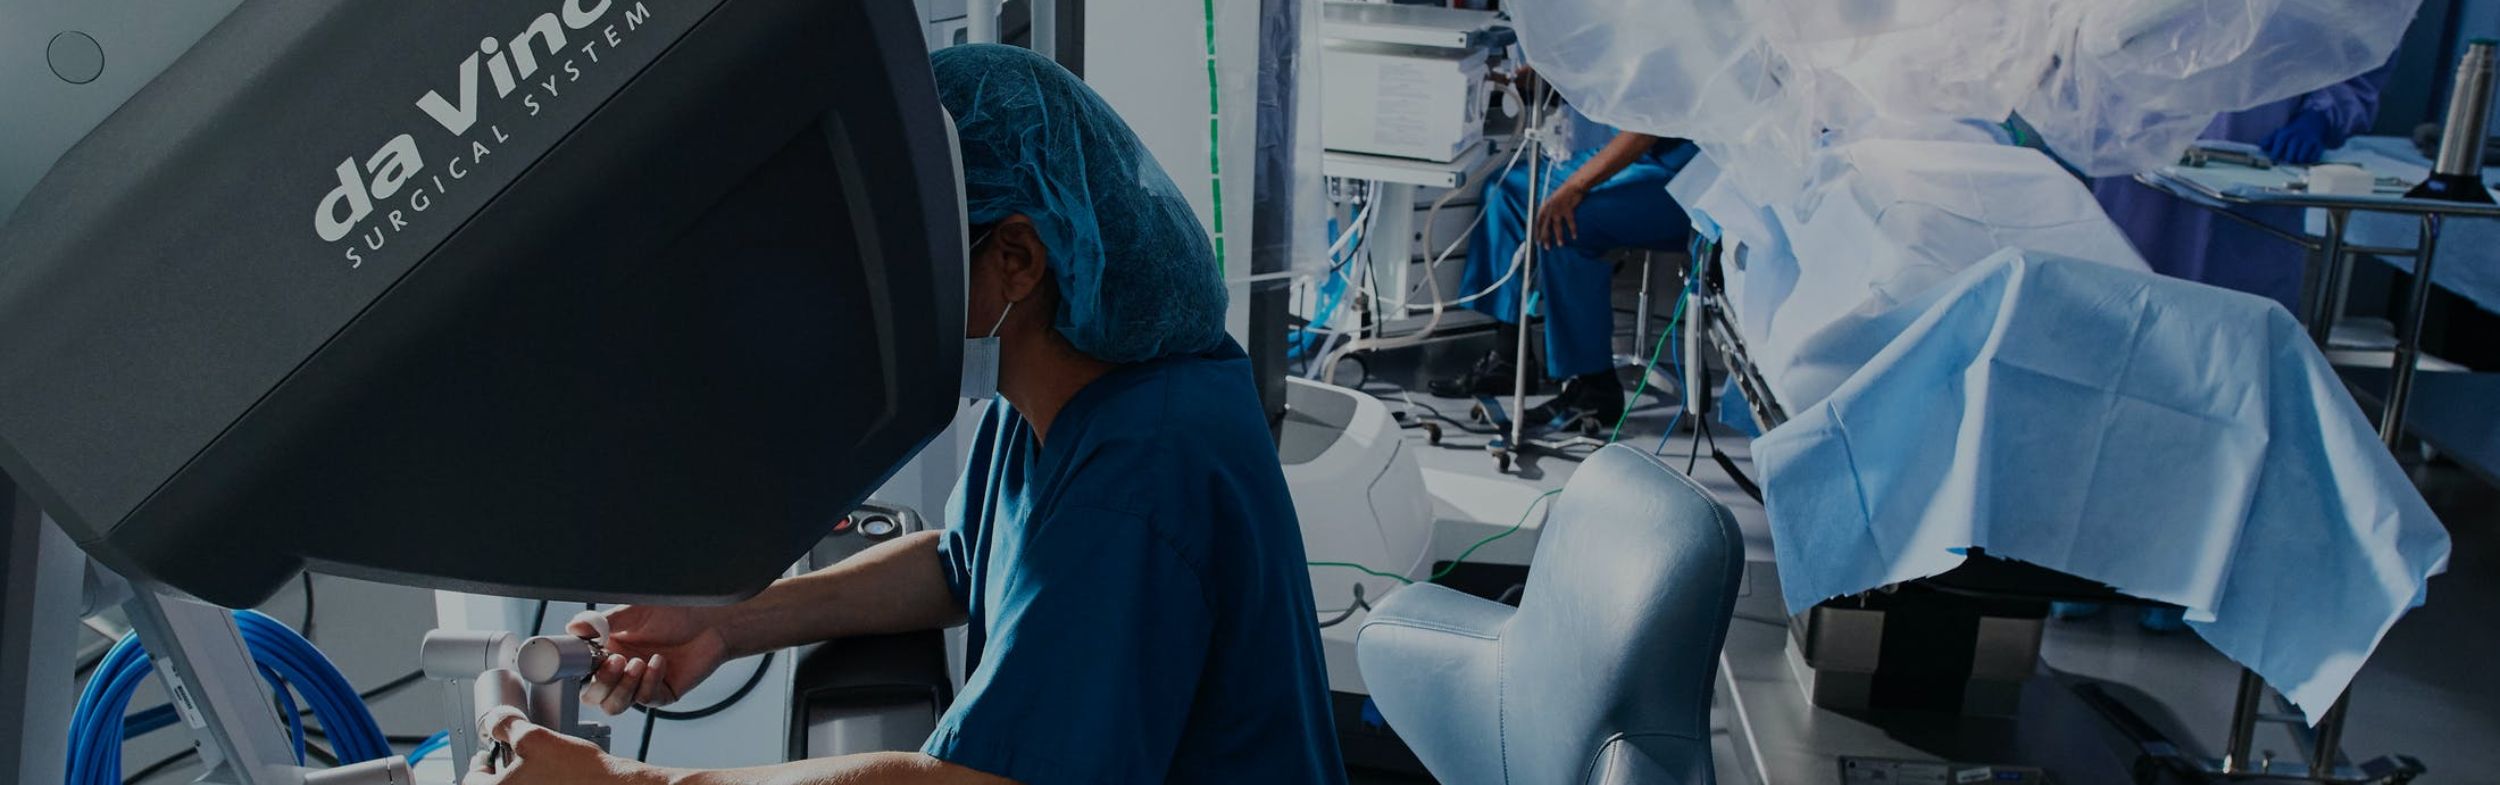 SJF Website_Cancer Care_da Vinci Surgical System console